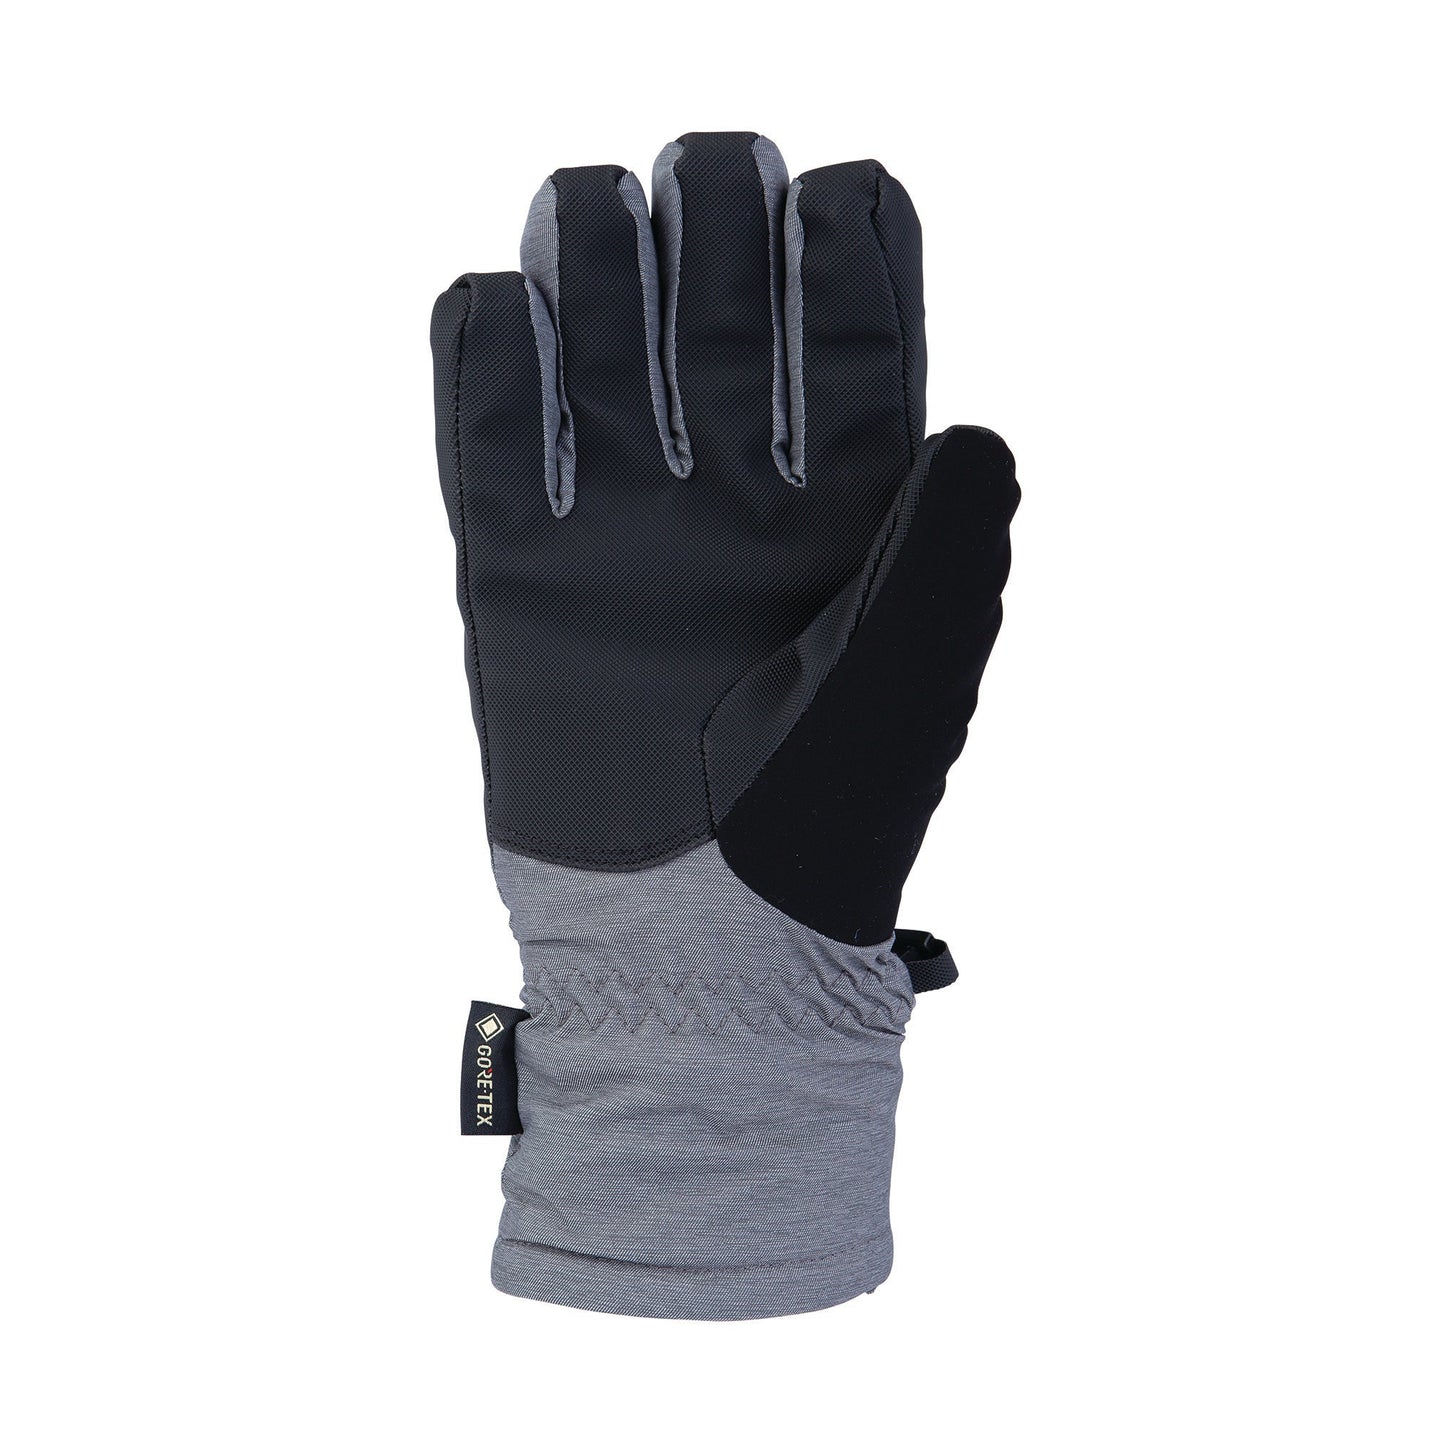 2023 Pow Wayback GTX +WARM Short Snow Gloves